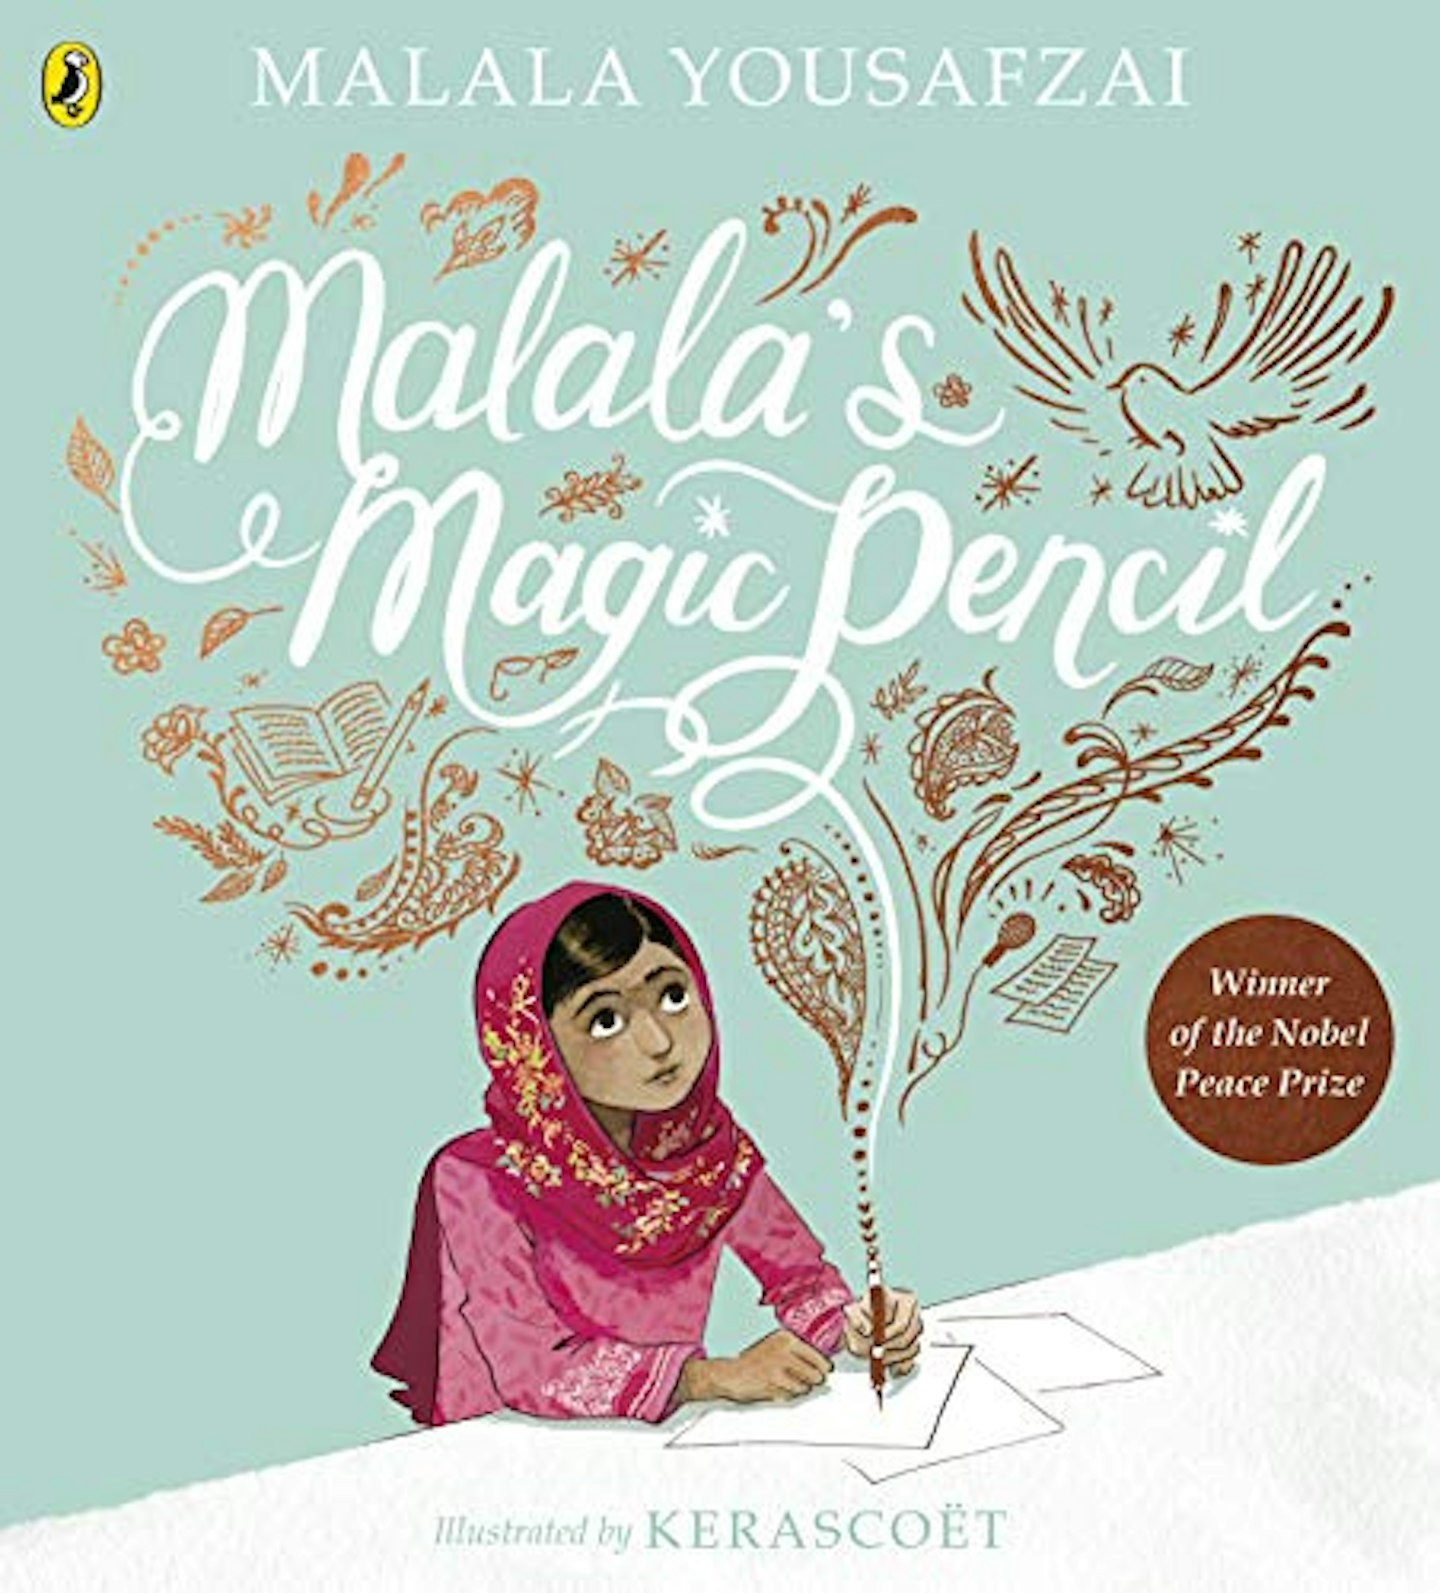 Malalau0026#039;s Magic Pencil by Malala Yousafzai